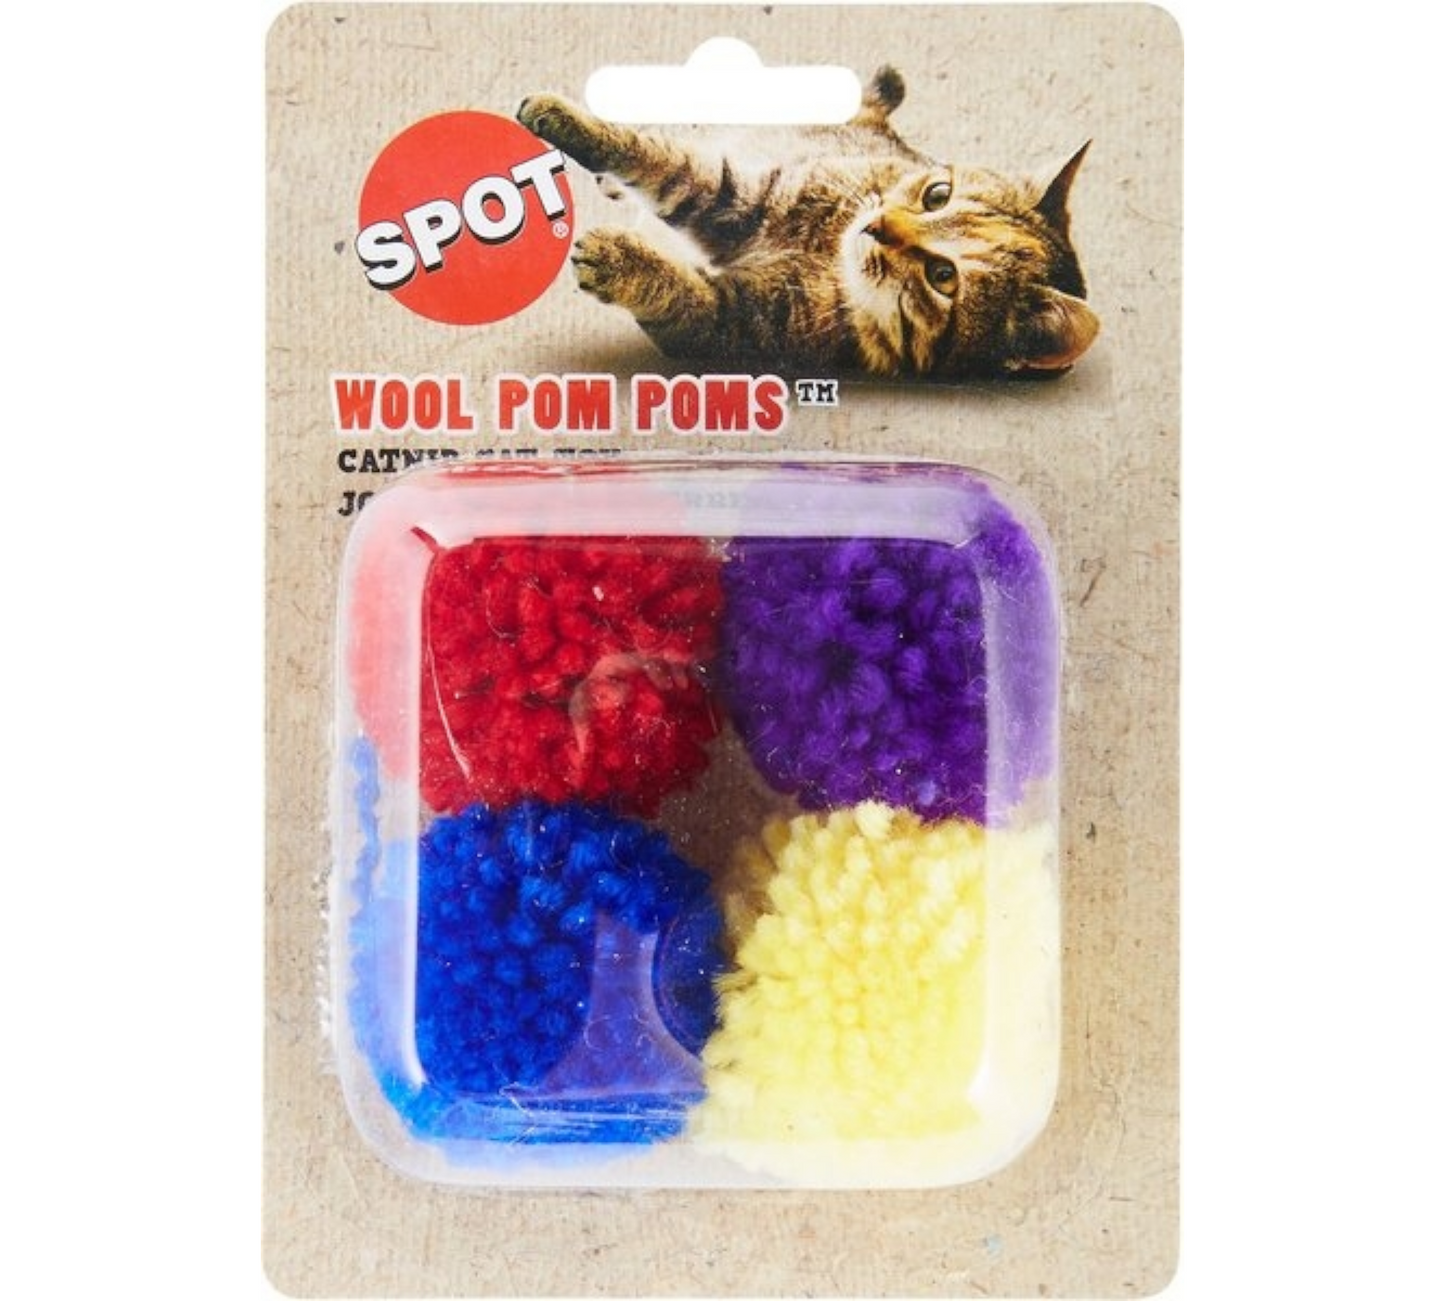 Canine's World Catnip Toys Spot Pet Wool Pom Poms Cat Toy with Catnip Spot